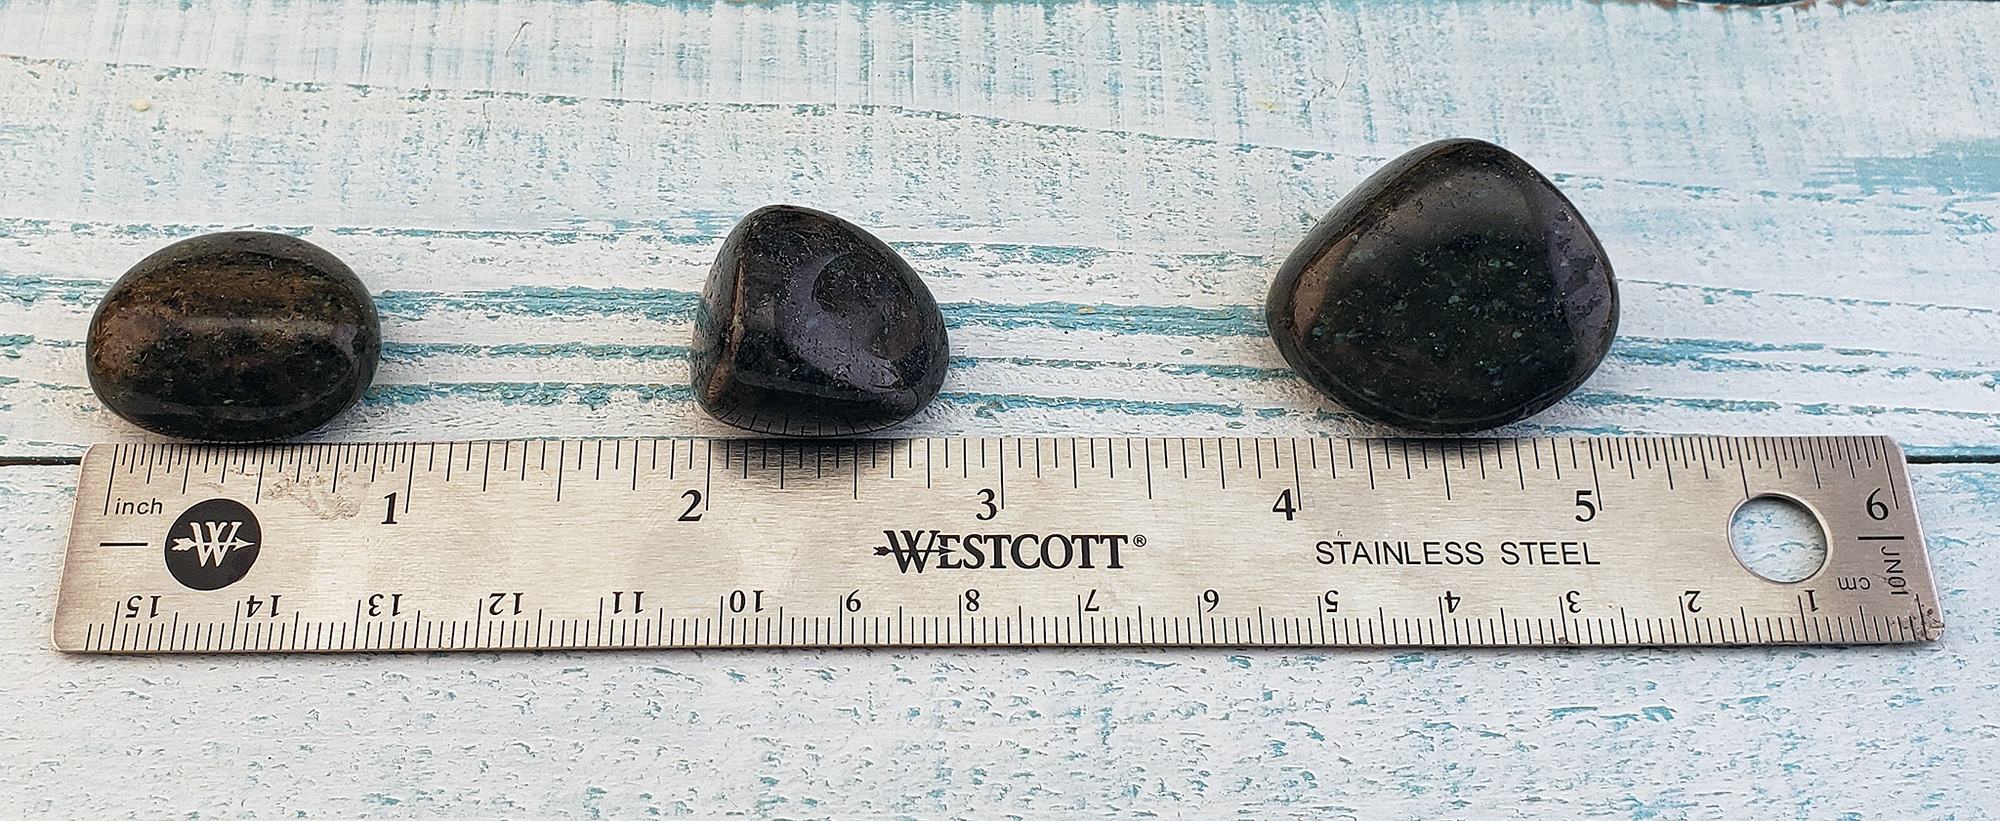 Micro Labradorite Tumbled Polished Natural Gemstone - Size Comparison